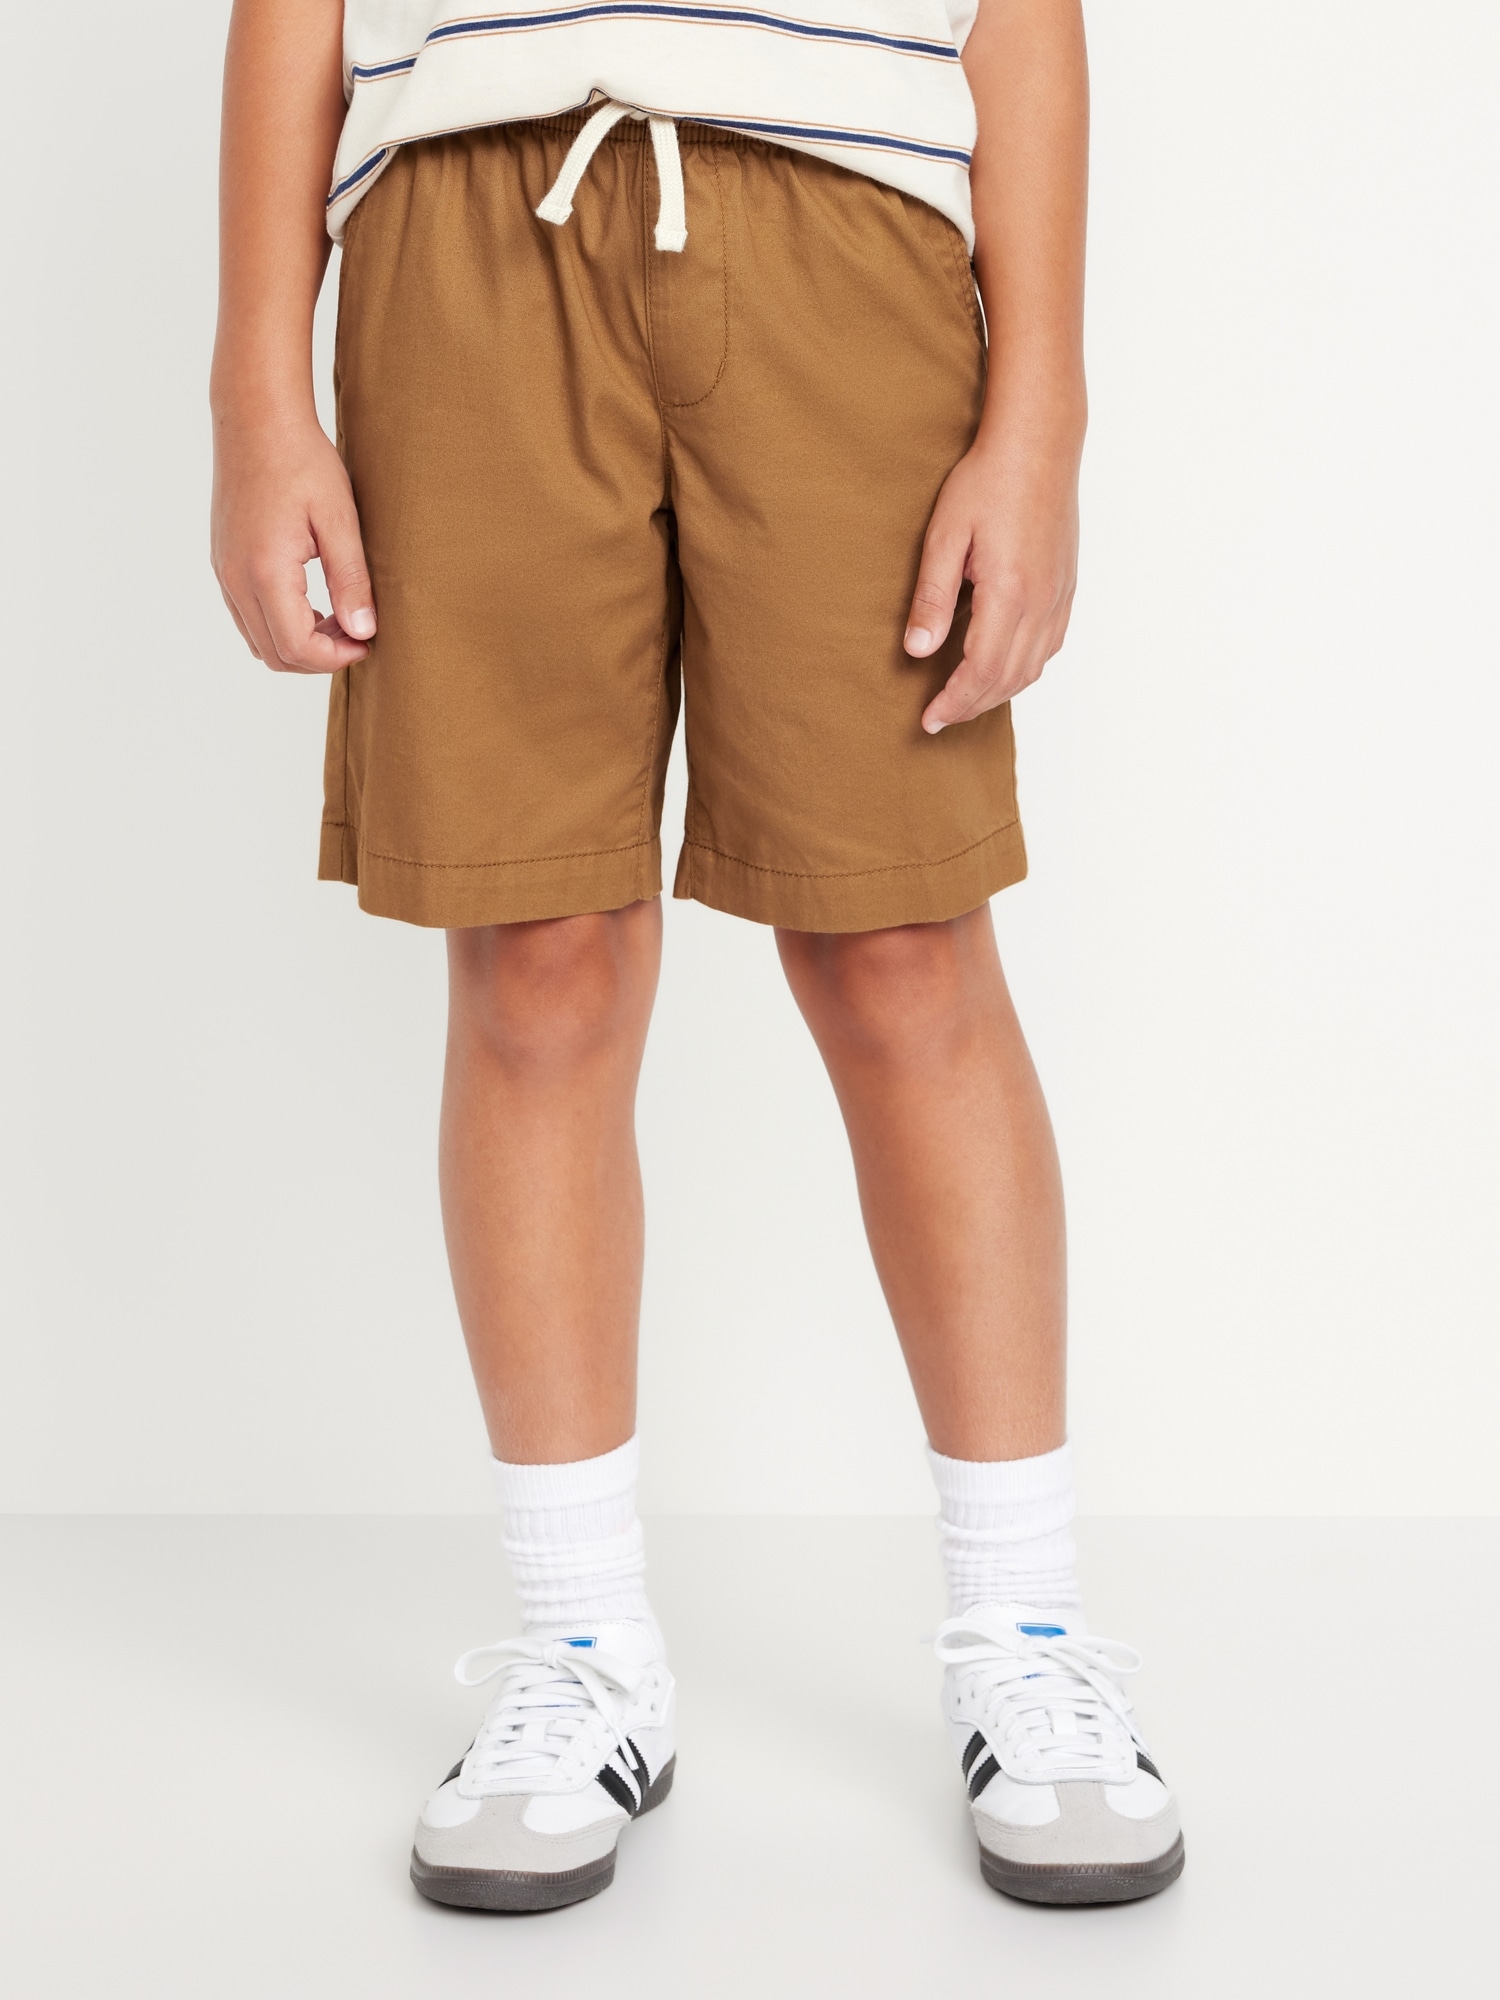 Knee Length Twill Jogger Shorts for Boys Hot Deal